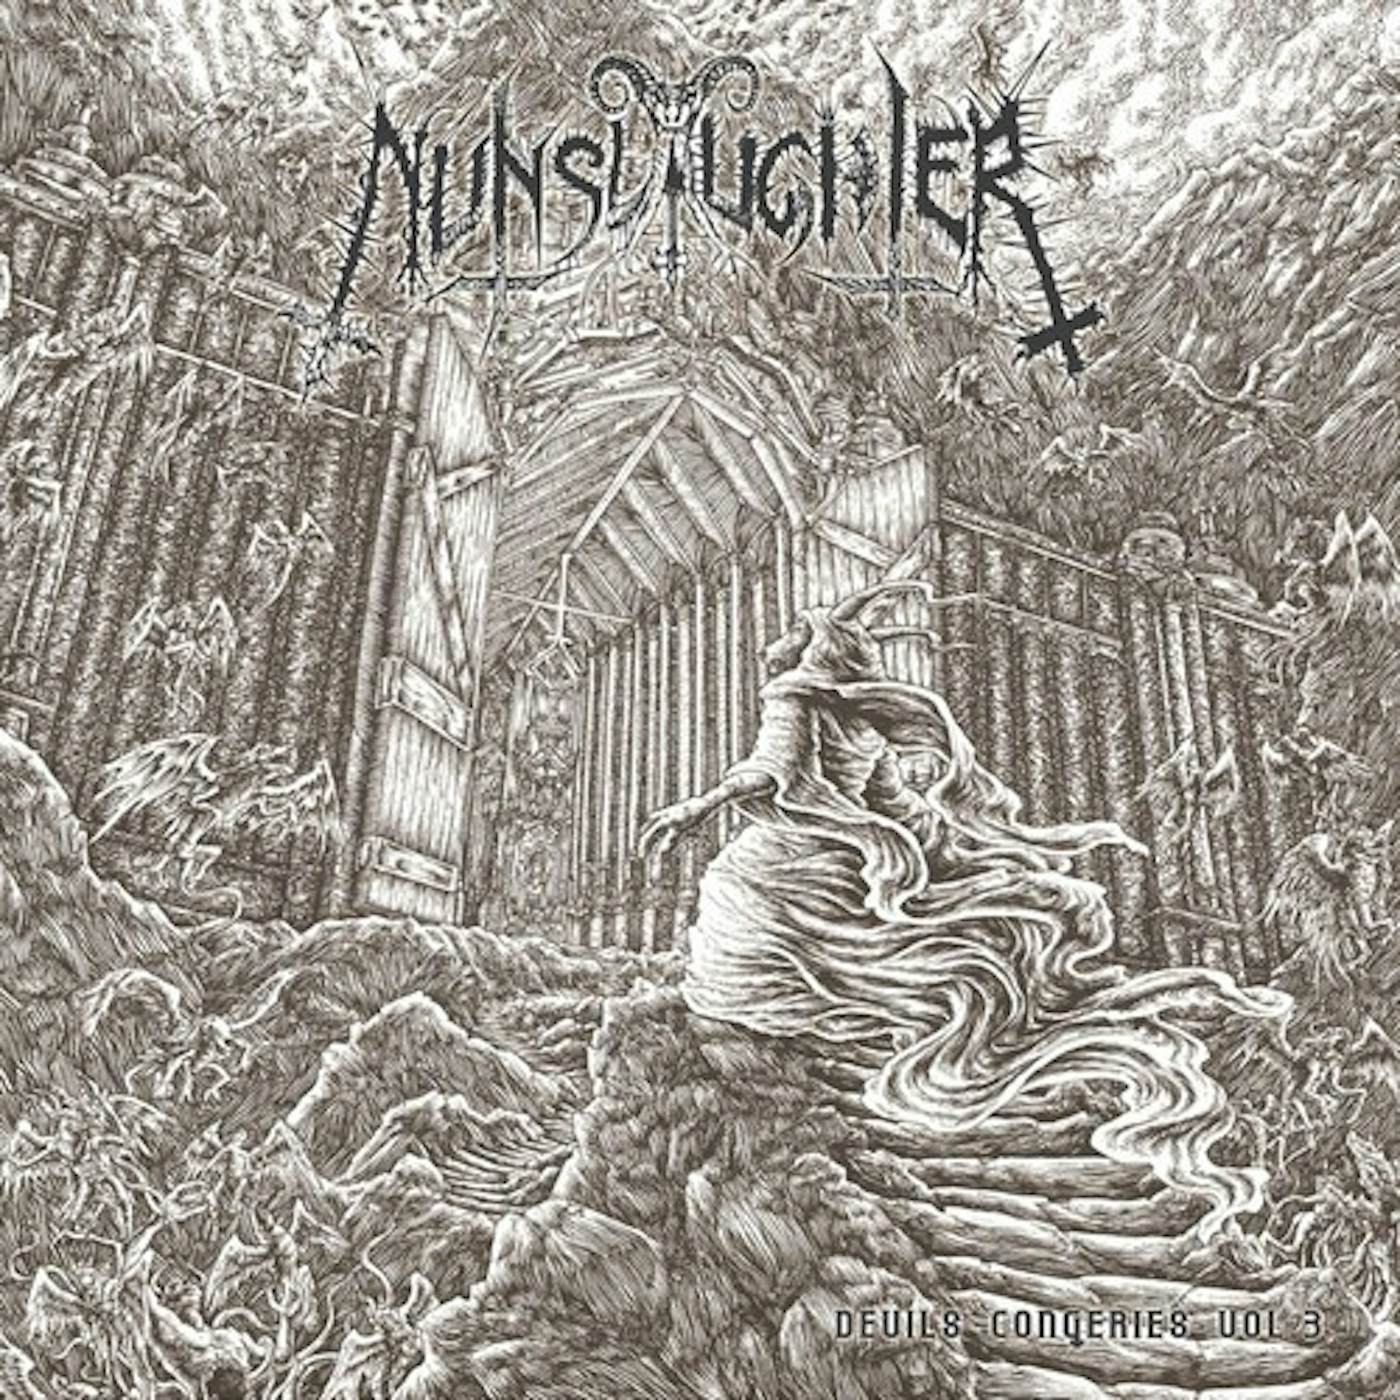 Nunslaughter DEVIL'S CONGERIES - VOLUME 3 CD